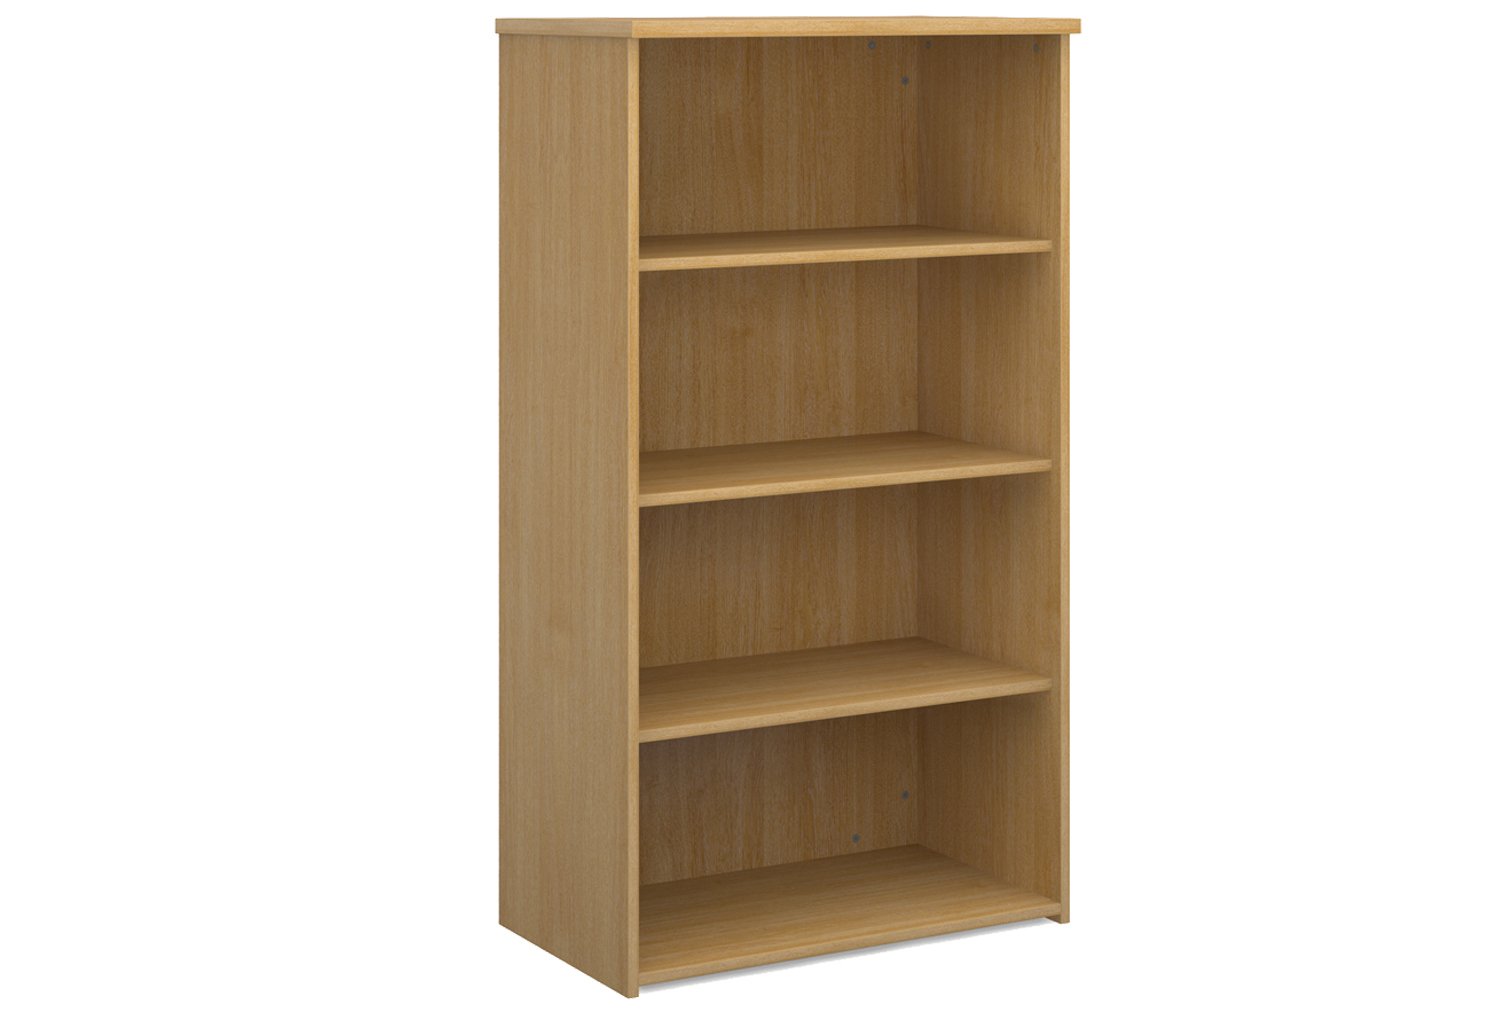 All Oak Office Bookcases, 3 Shelf - 80wx47dx144h (cm)